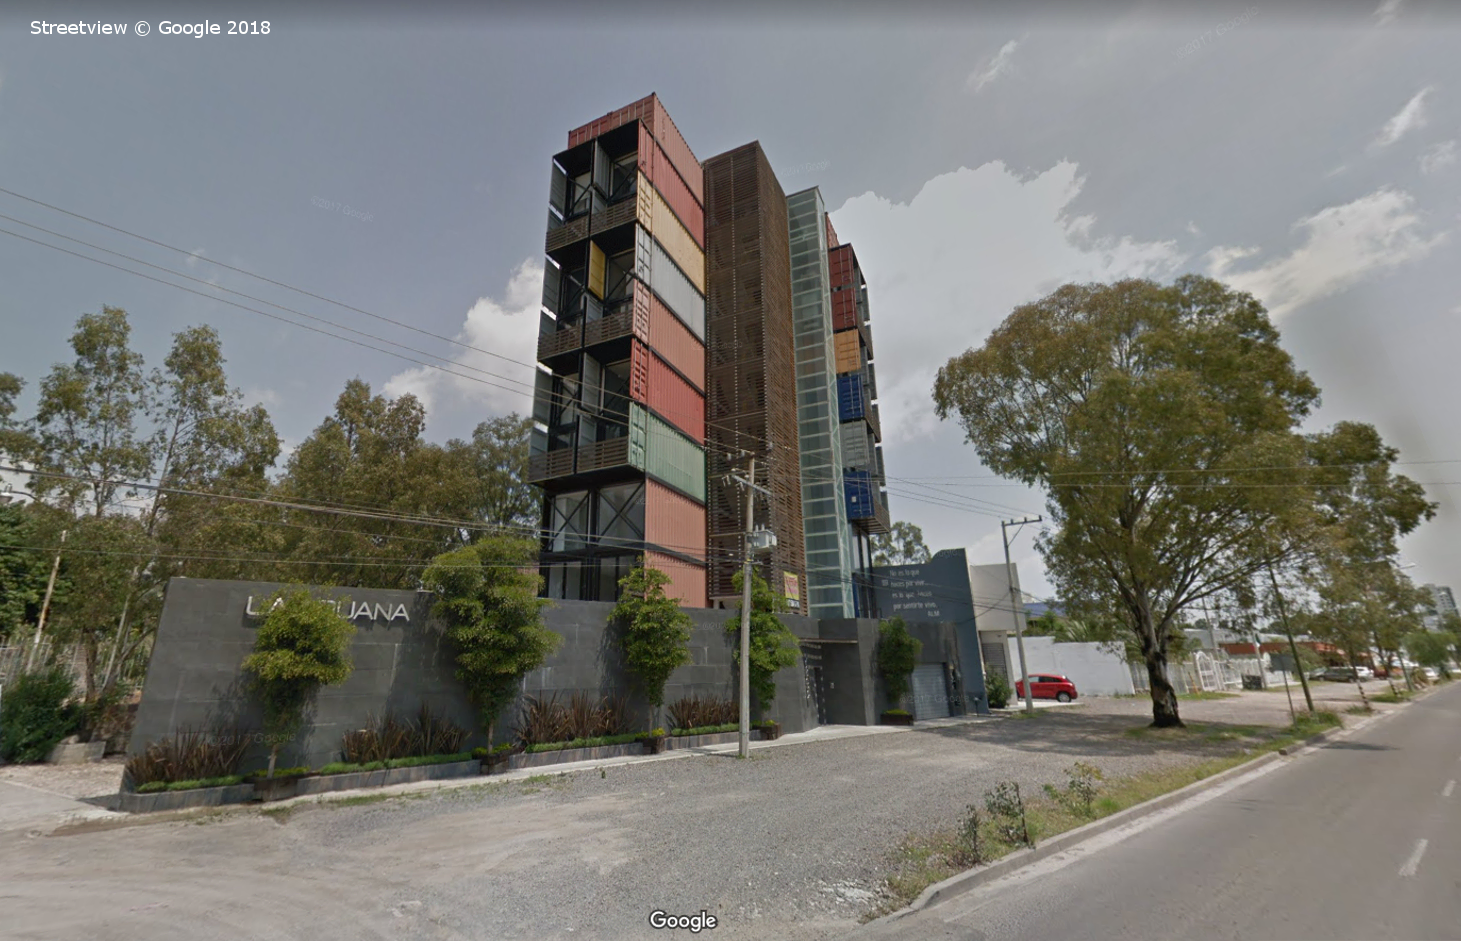 La Aduana Aparement Comples, Leon Mexico, Google Streetview